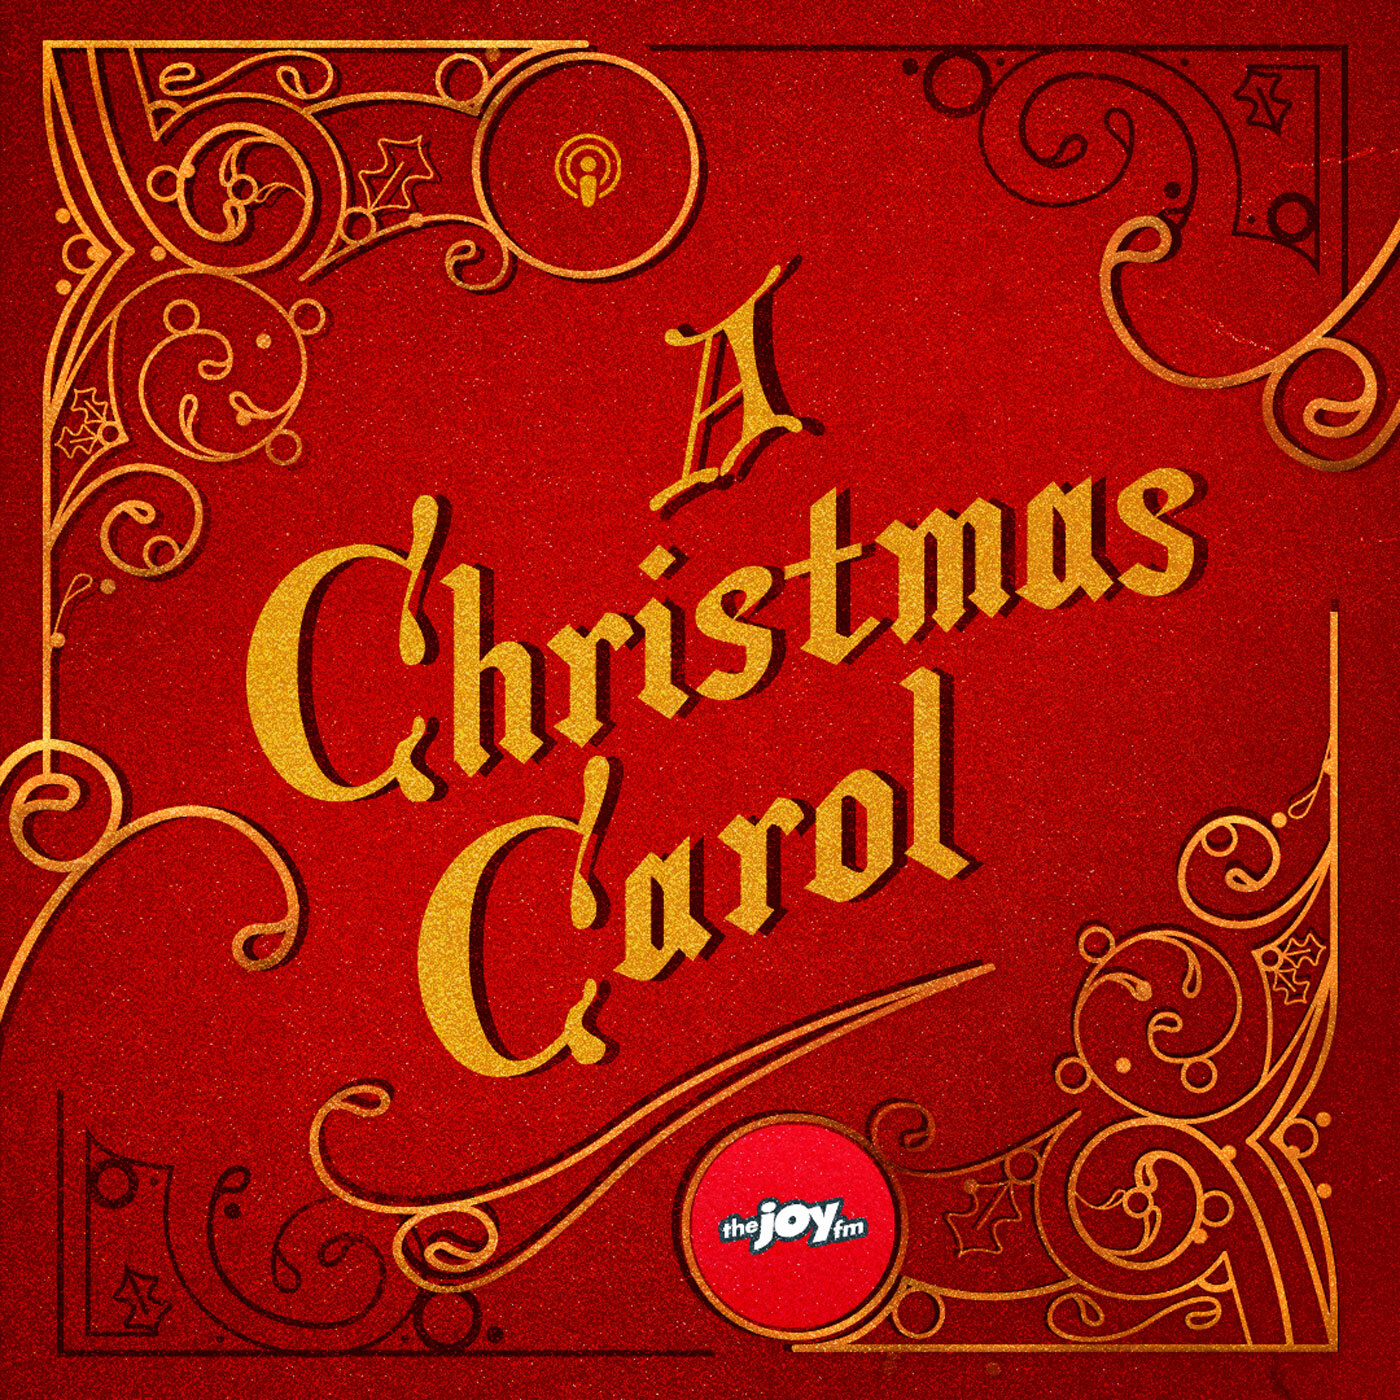 A Christmas Carol - Episode 2: Facing the Past